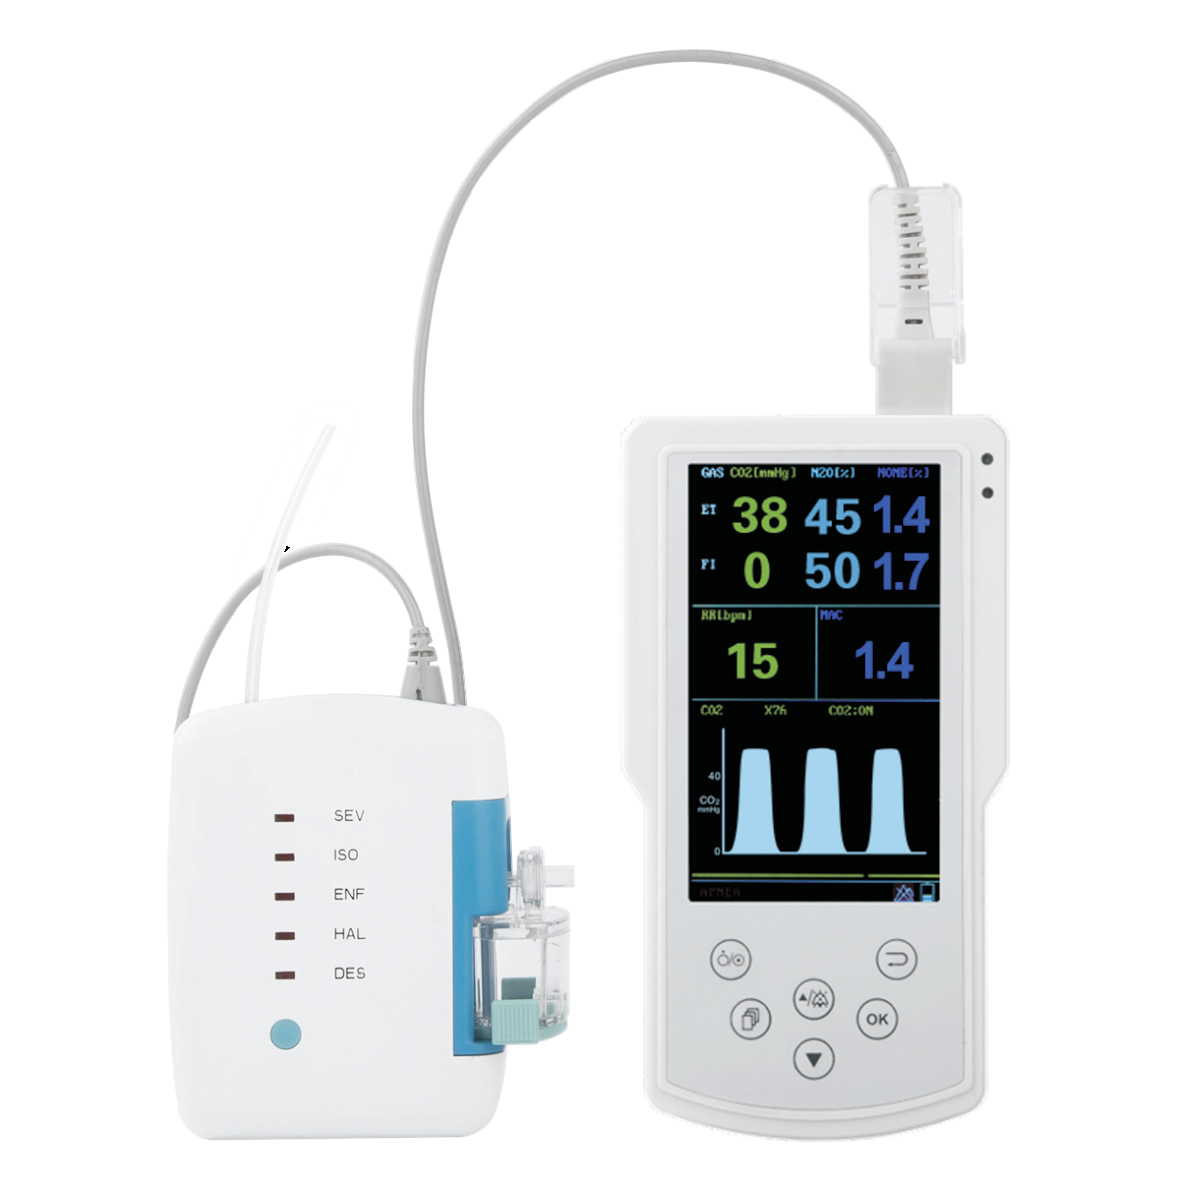 The Anesthesia Agent Analyzer Kits --MG1000 Handheld/Portable Multi-Gas Analyzer.